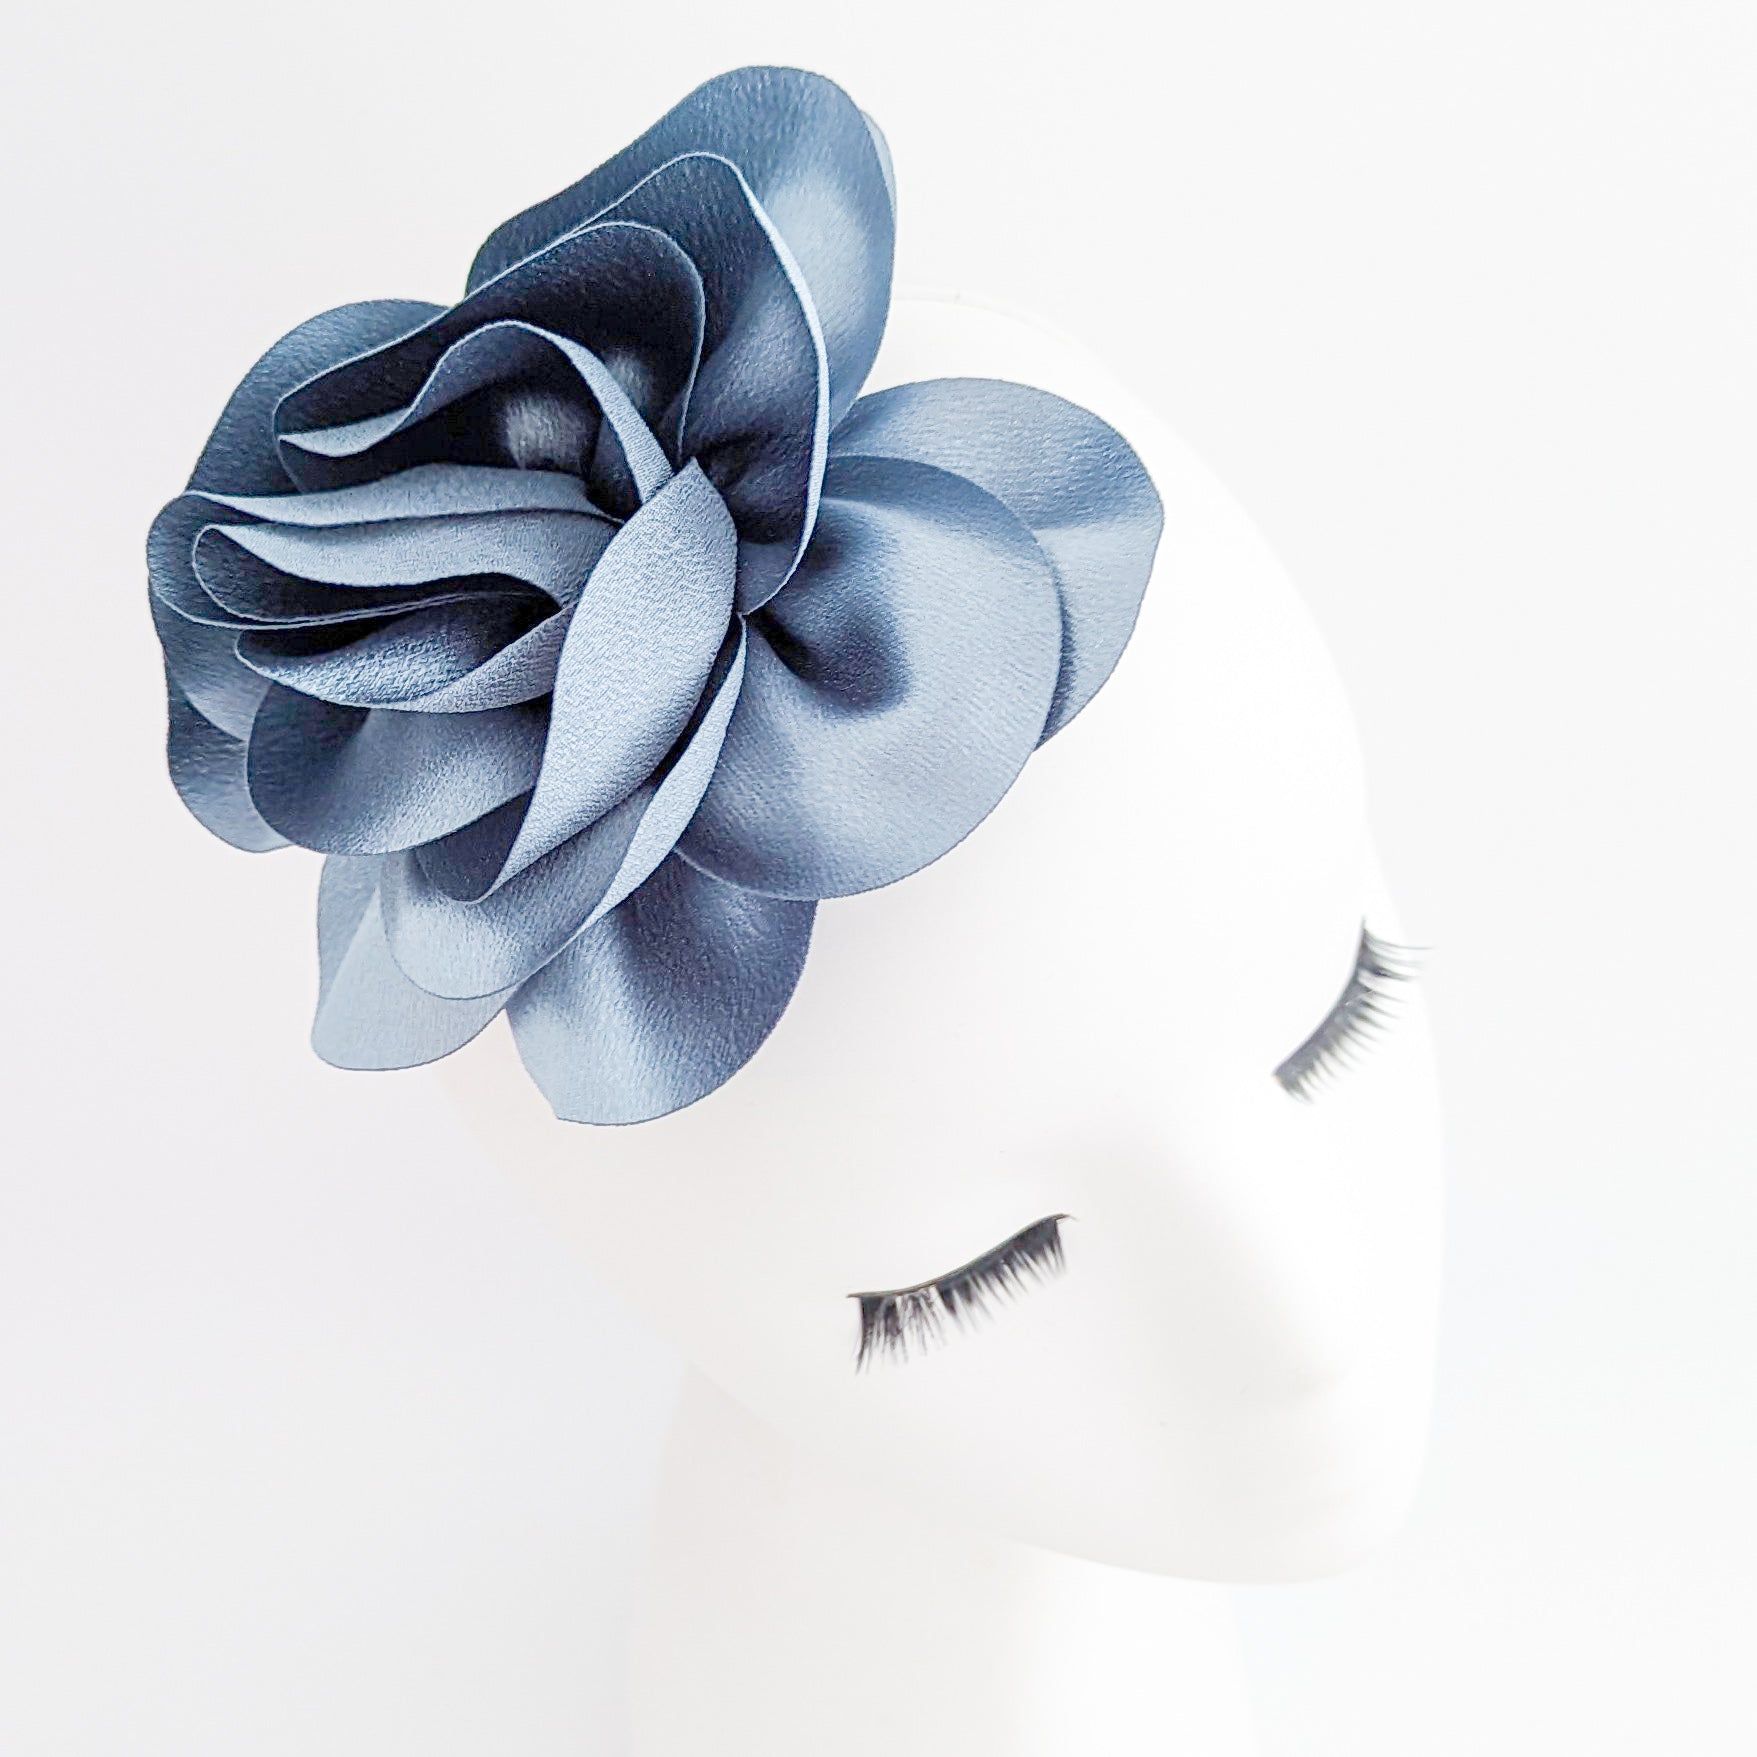 Dusty blue satin rose fascinator hat